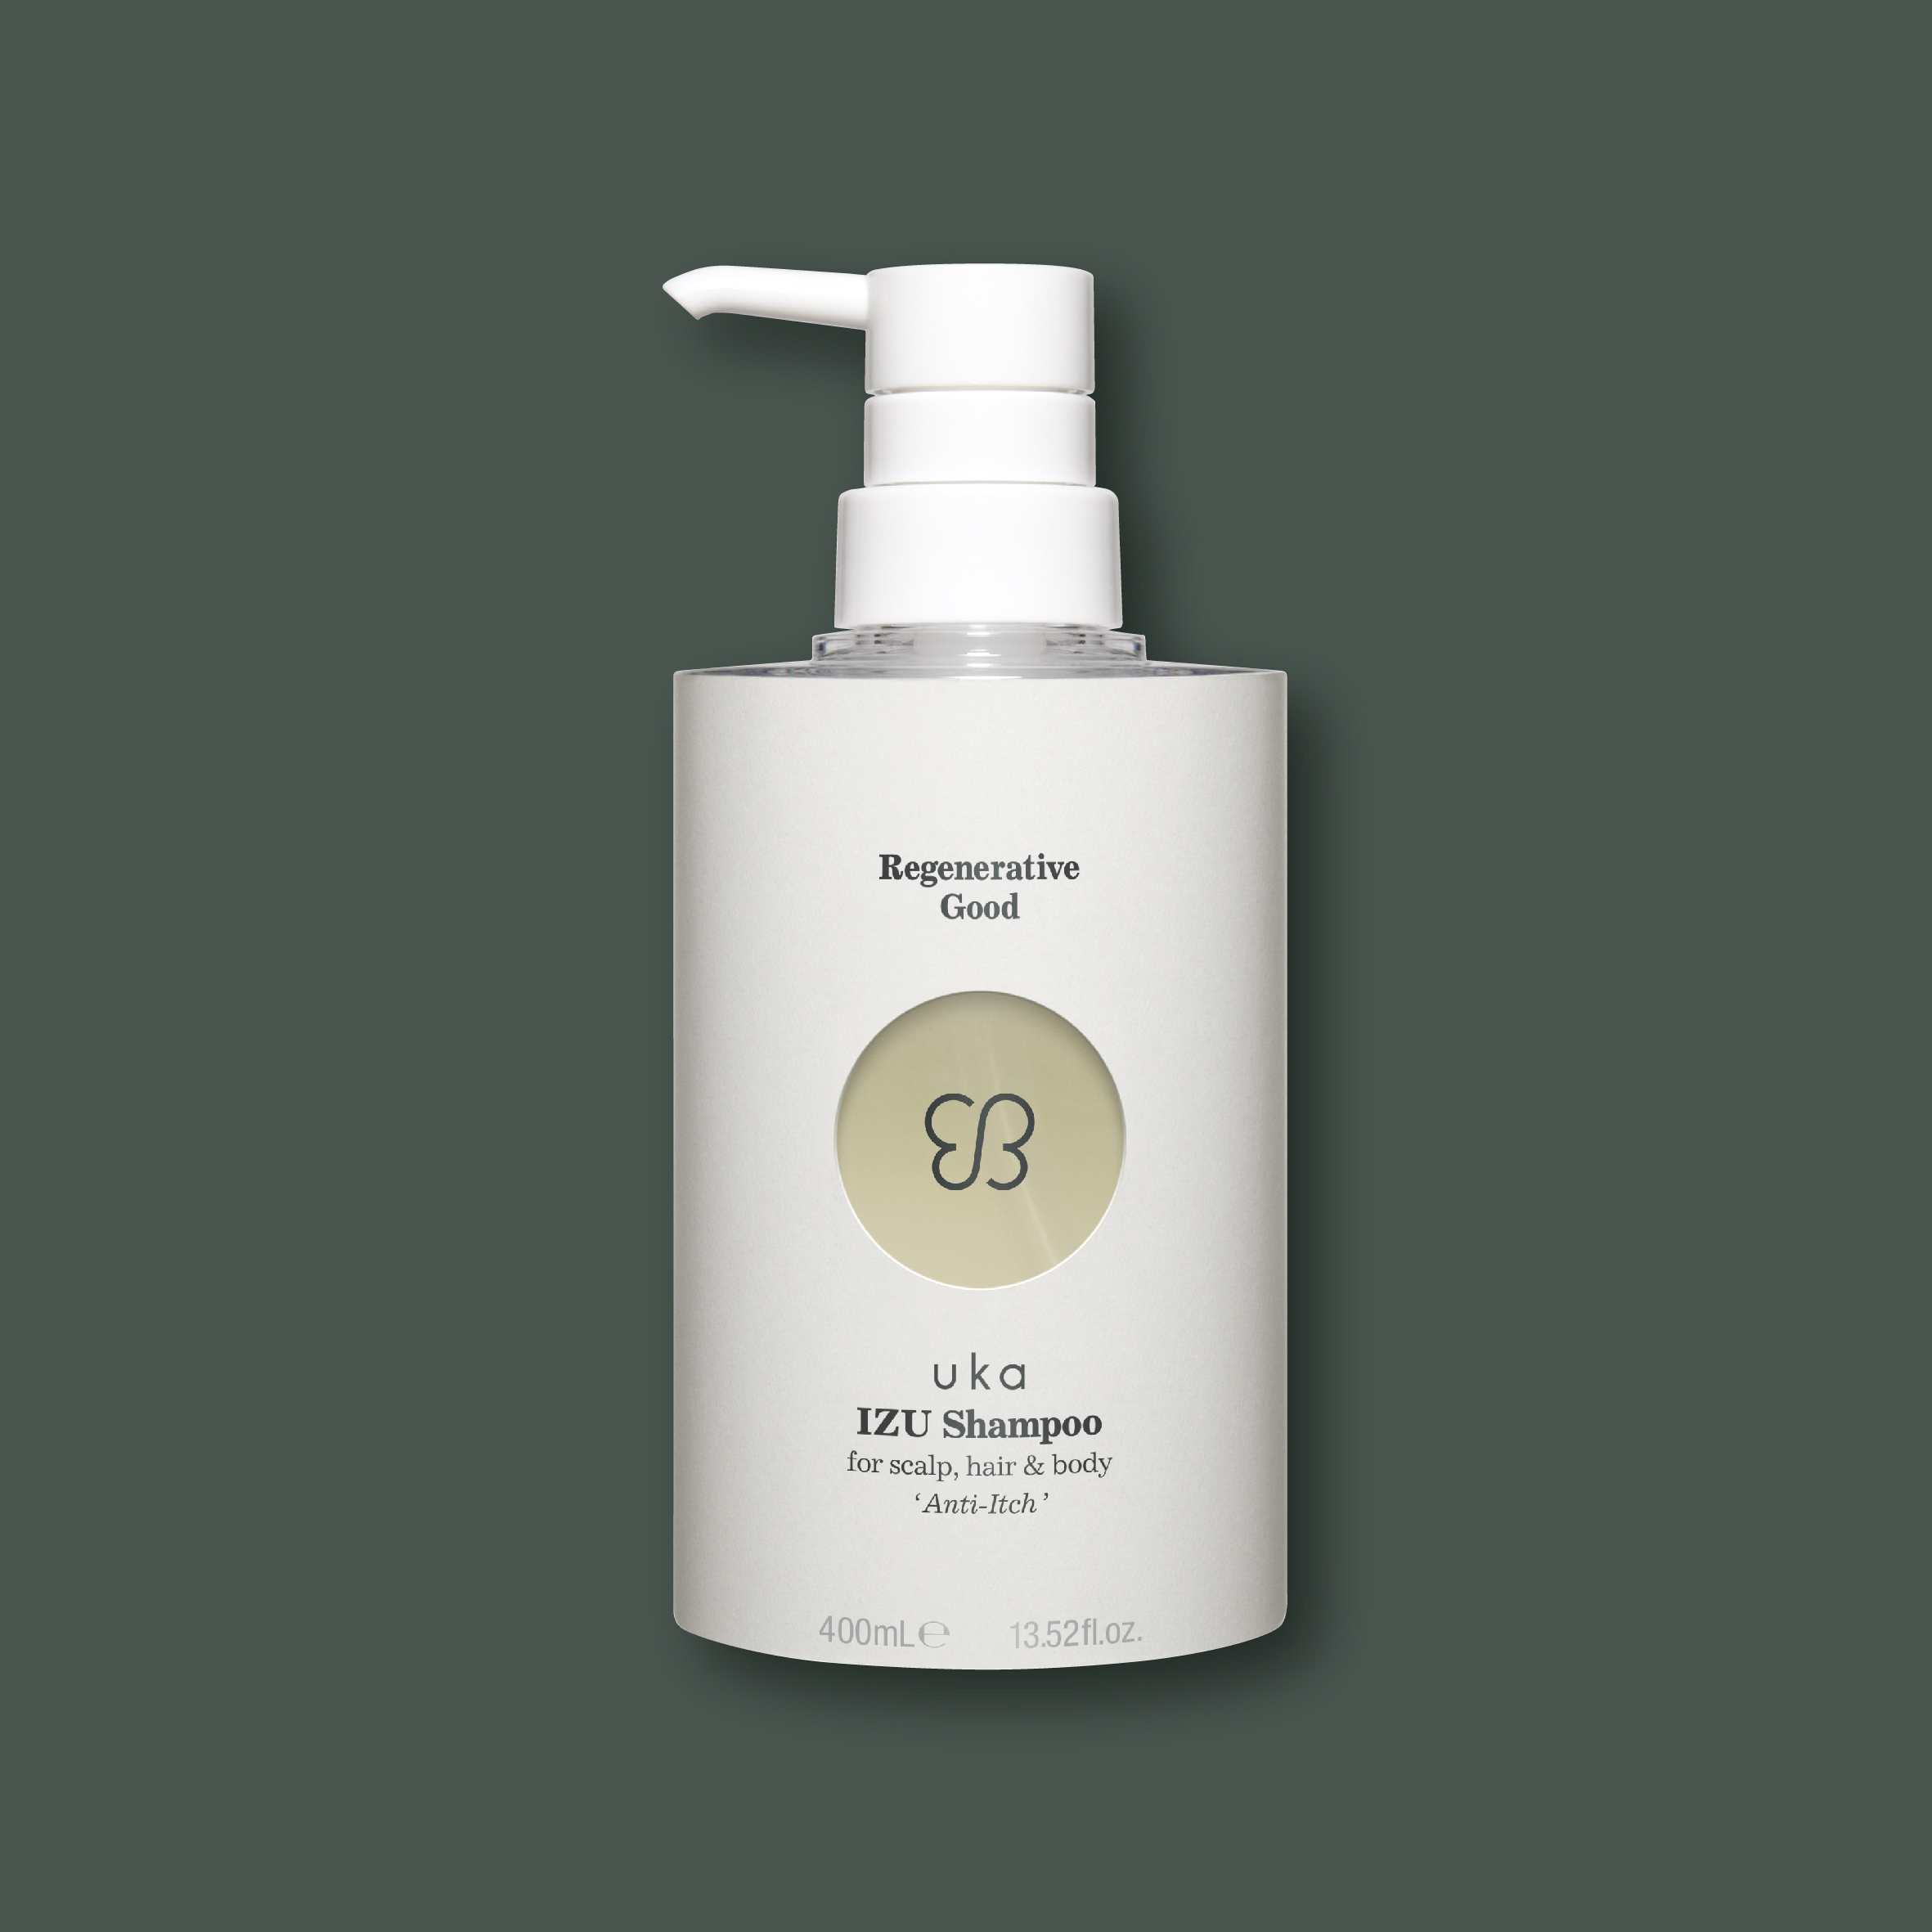 uka IZU Shampoo for scalp,hair&body 'Anti-Itch' 400mL Bottle